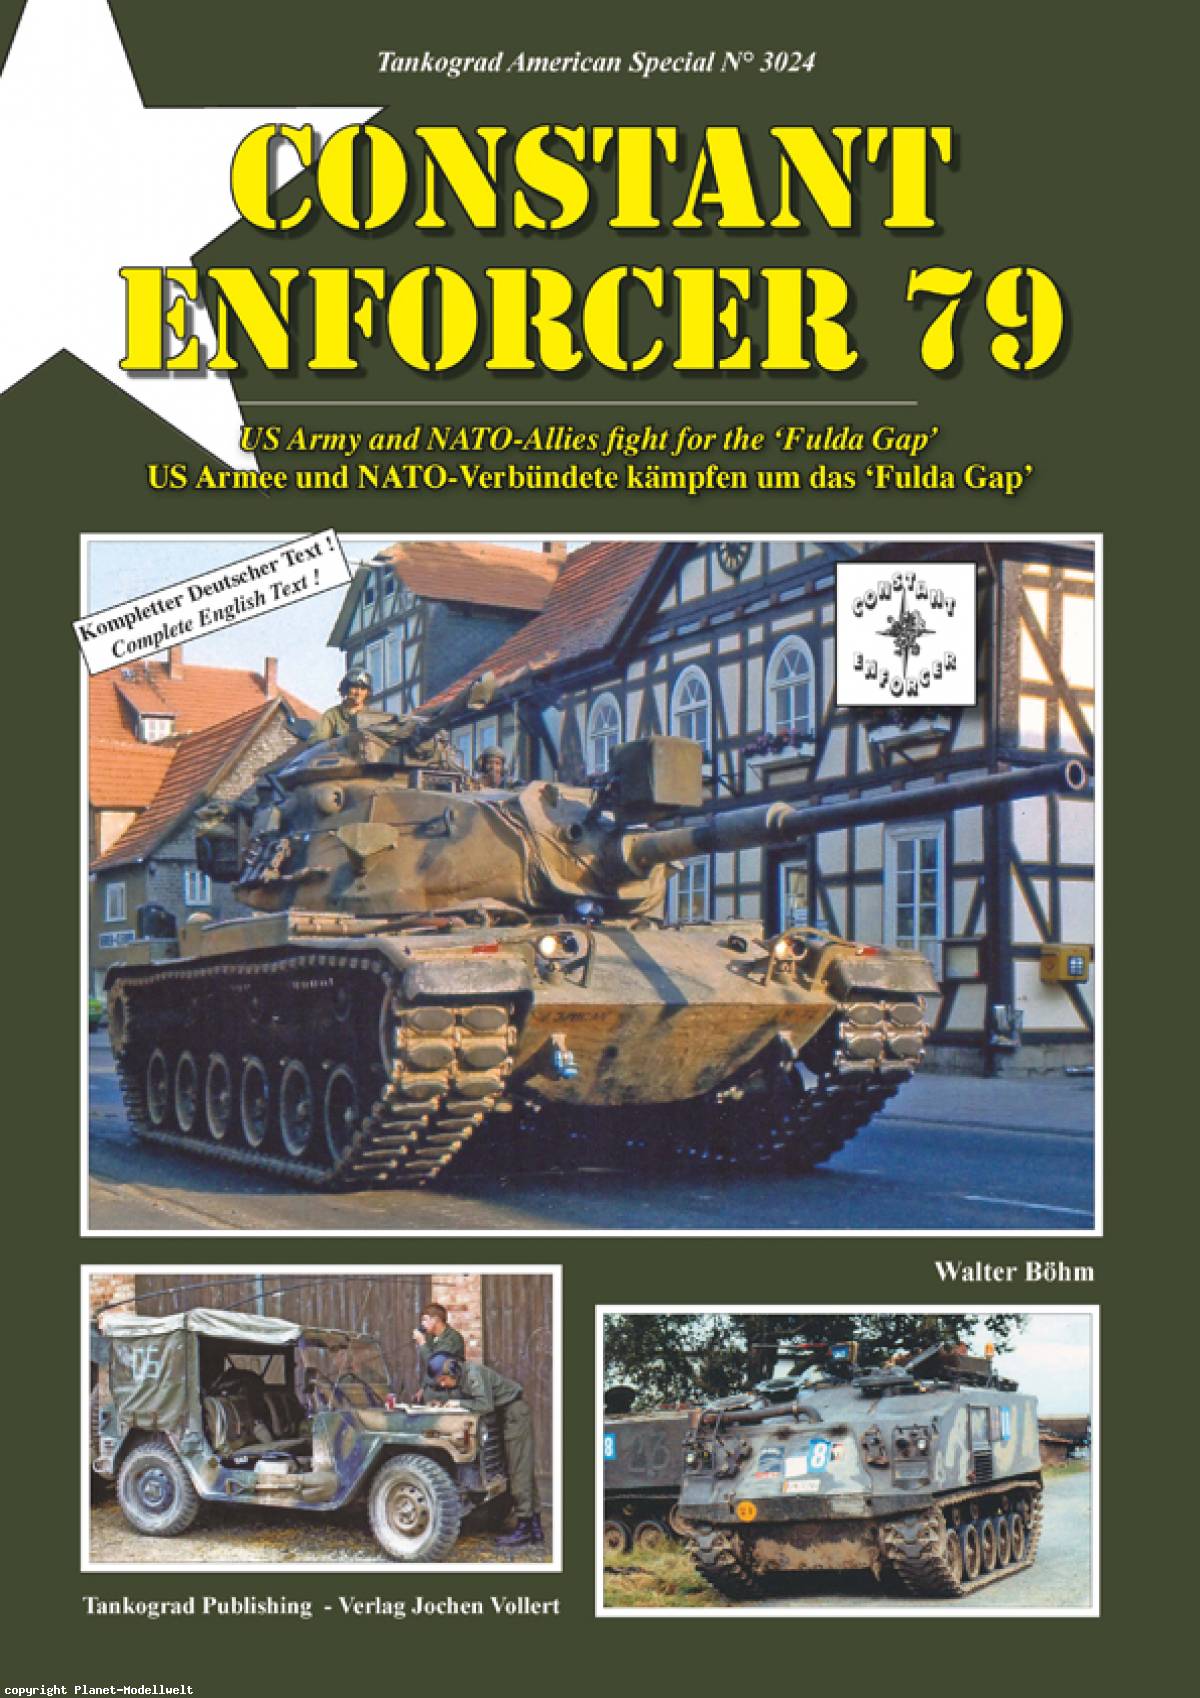 Tankograd 3024 - Constant Enforcer 79